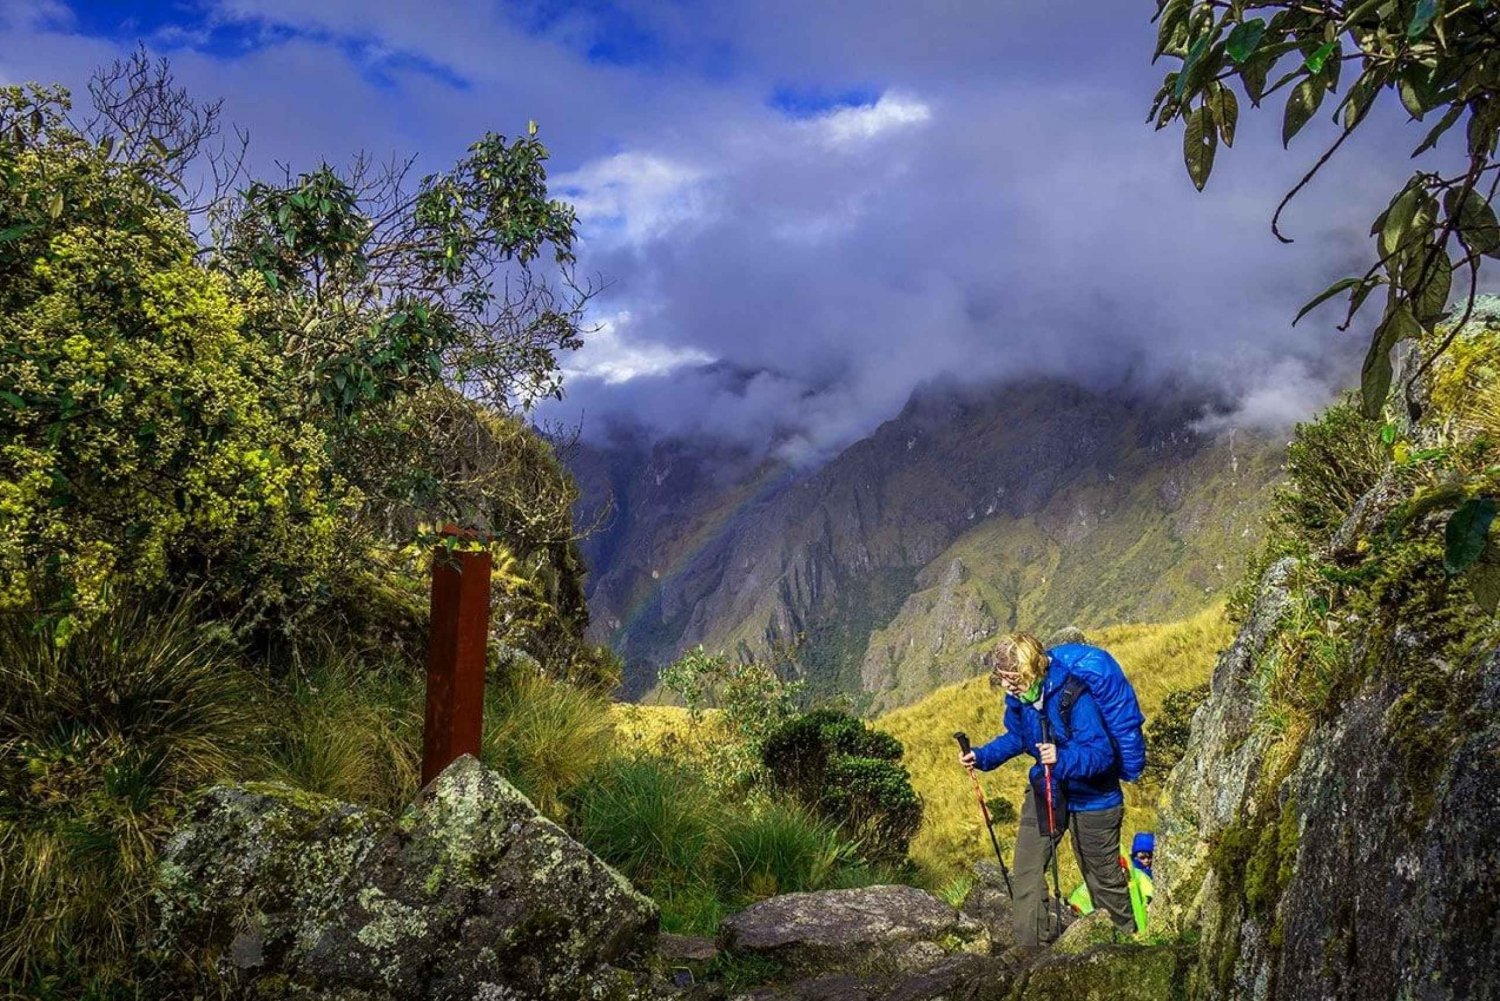 Inca Jungle Trail till Machu Picchu 4 dagar